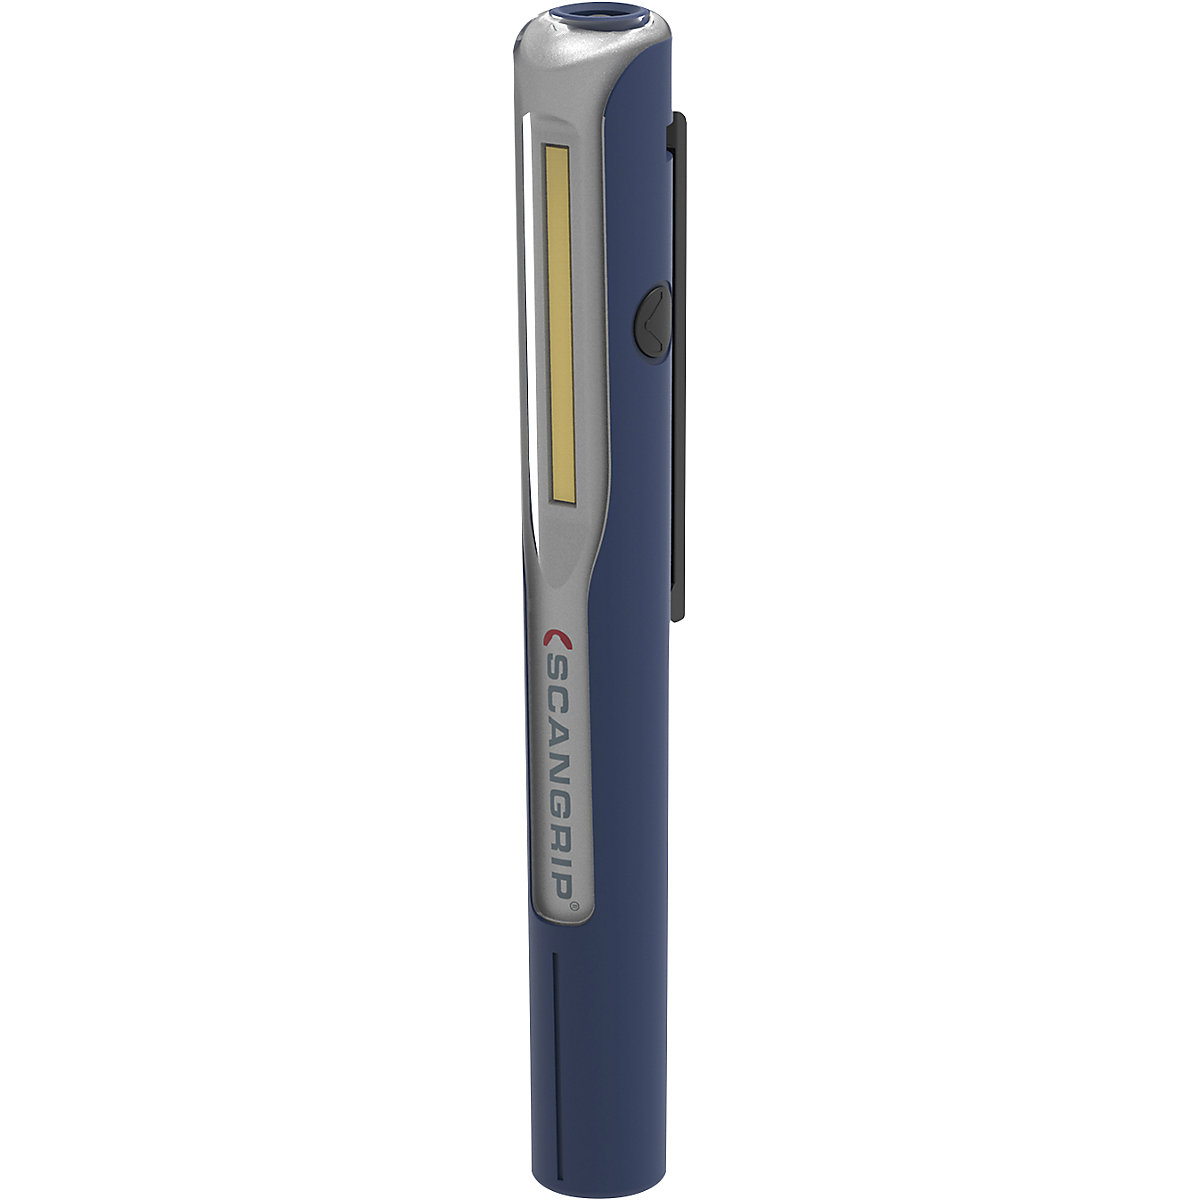 Akumulatorowa latarka długopisowa LED MAG PEN 3 – SCANGRIP (Zdjęcie produktu 10)-9